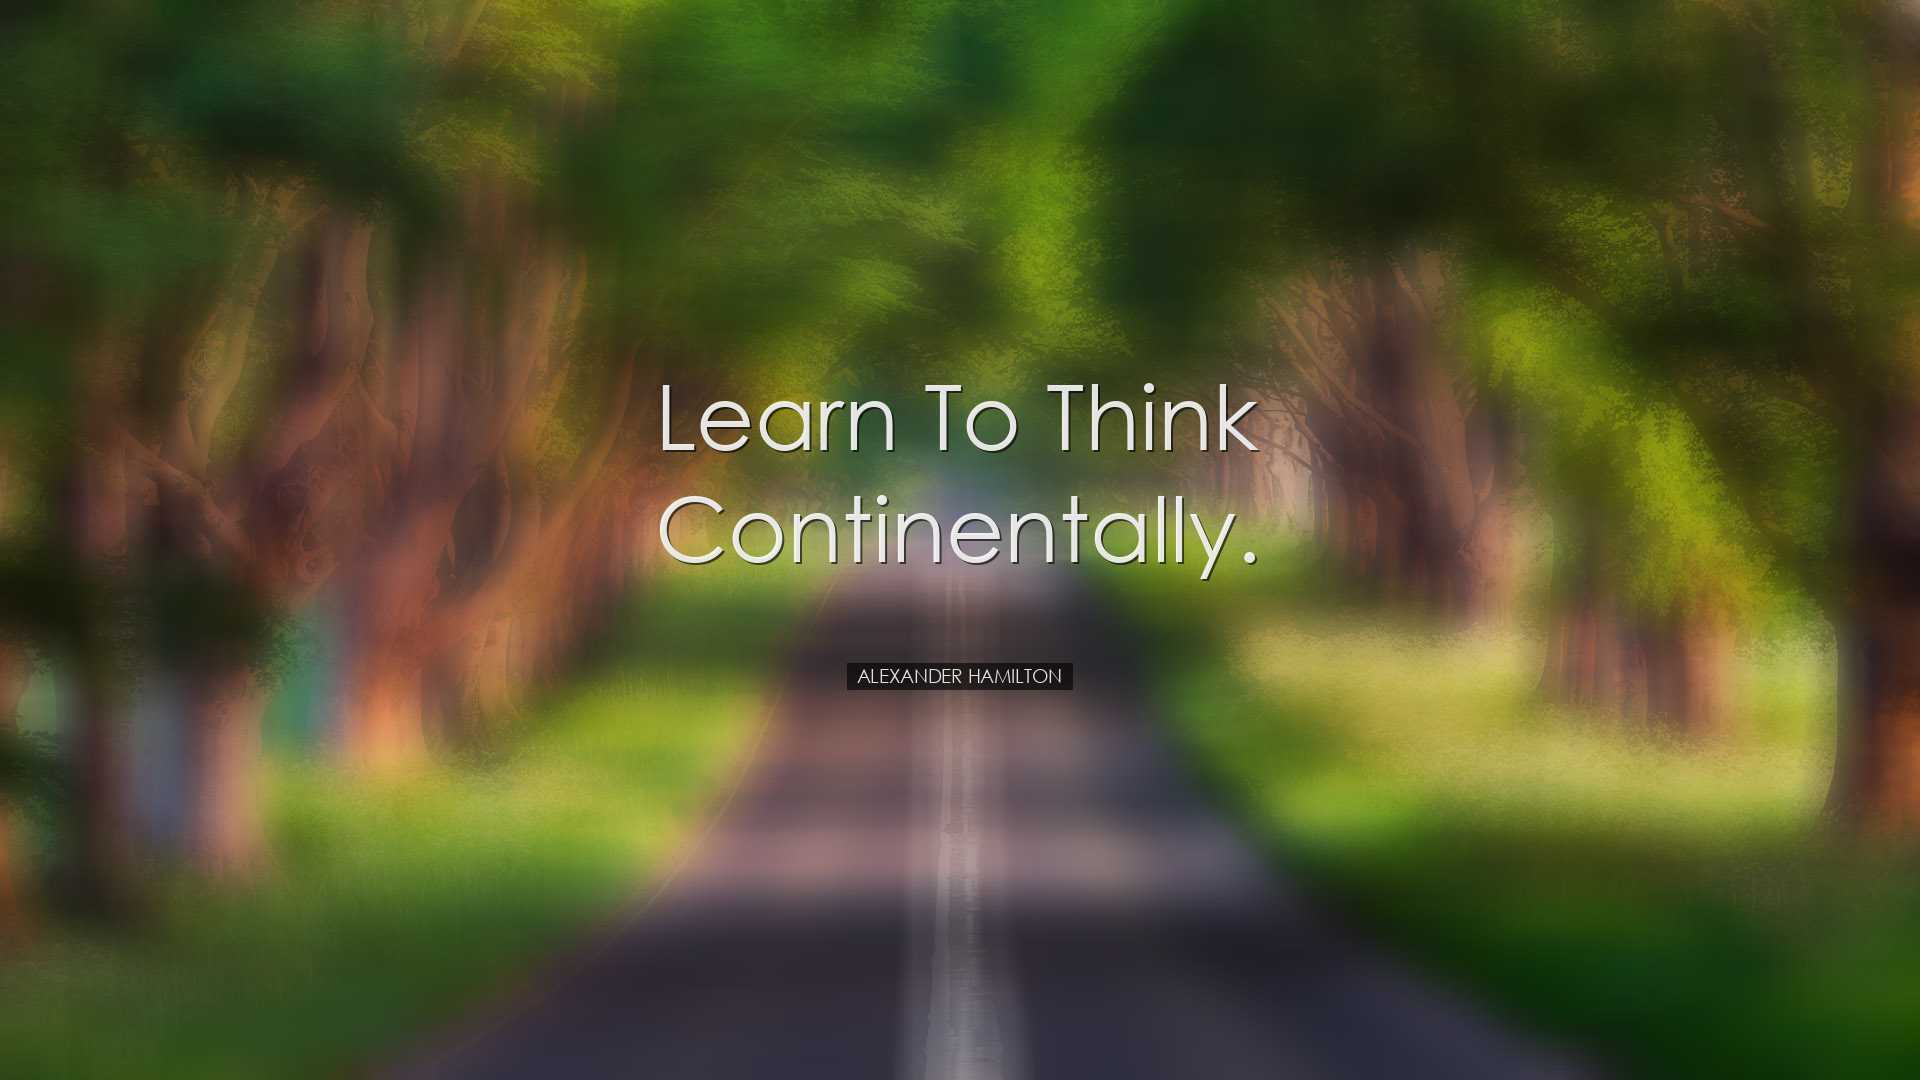 Learn to think continentally. - Alexander Hamilton